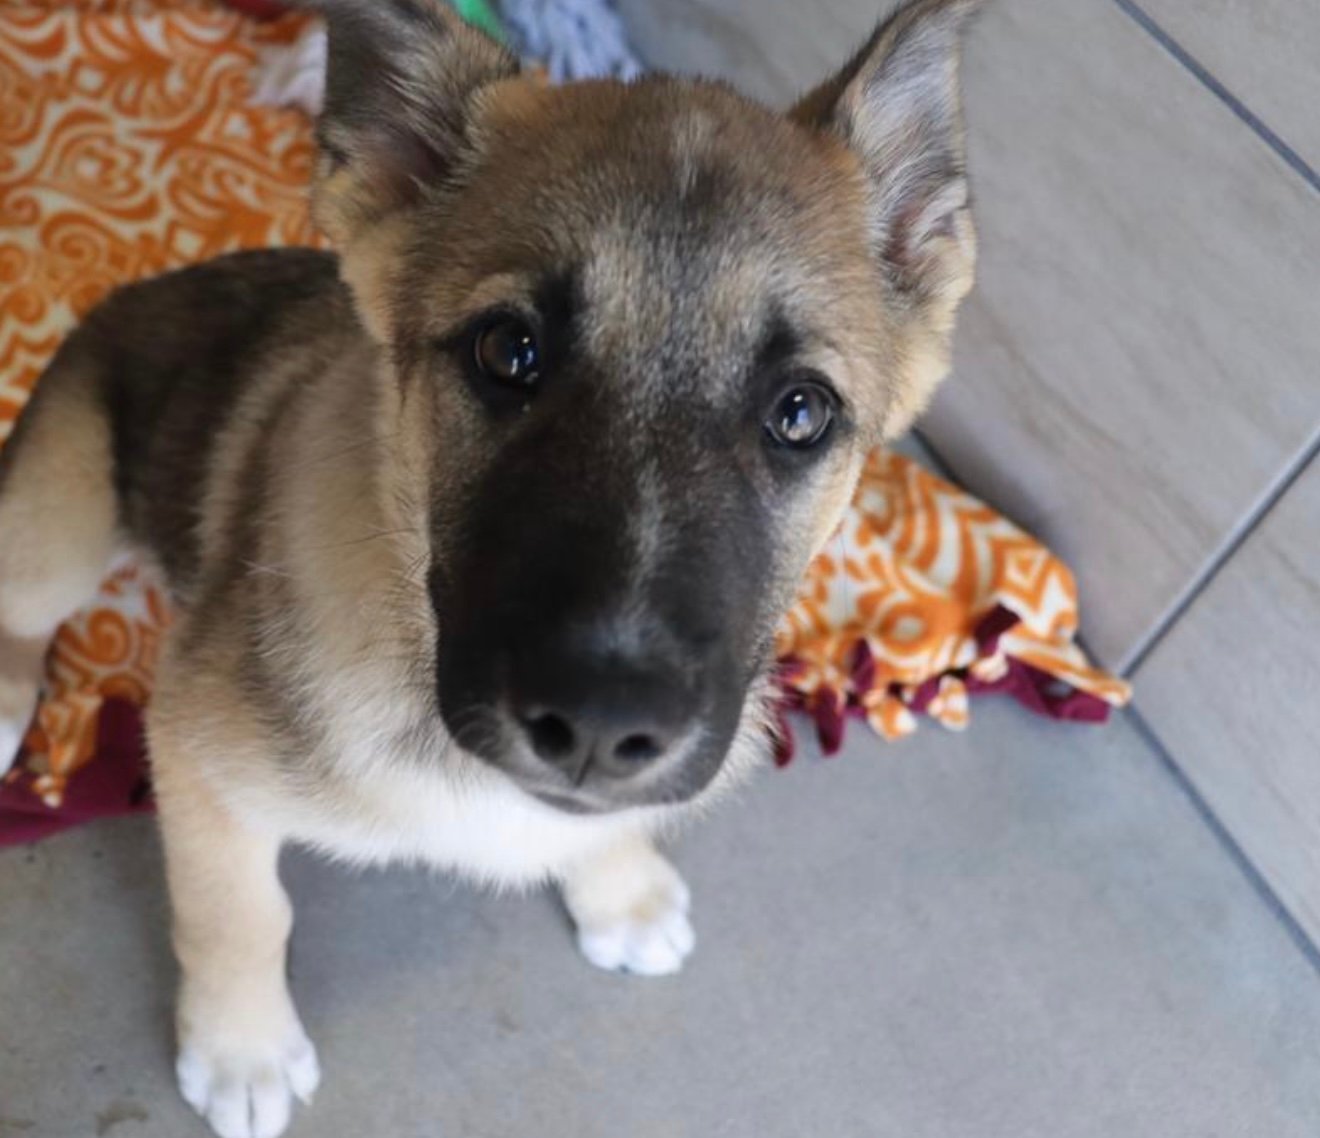 Fayetteville animal shelter to offer free dog adoptions during spring break  – Fayetteville Flyer